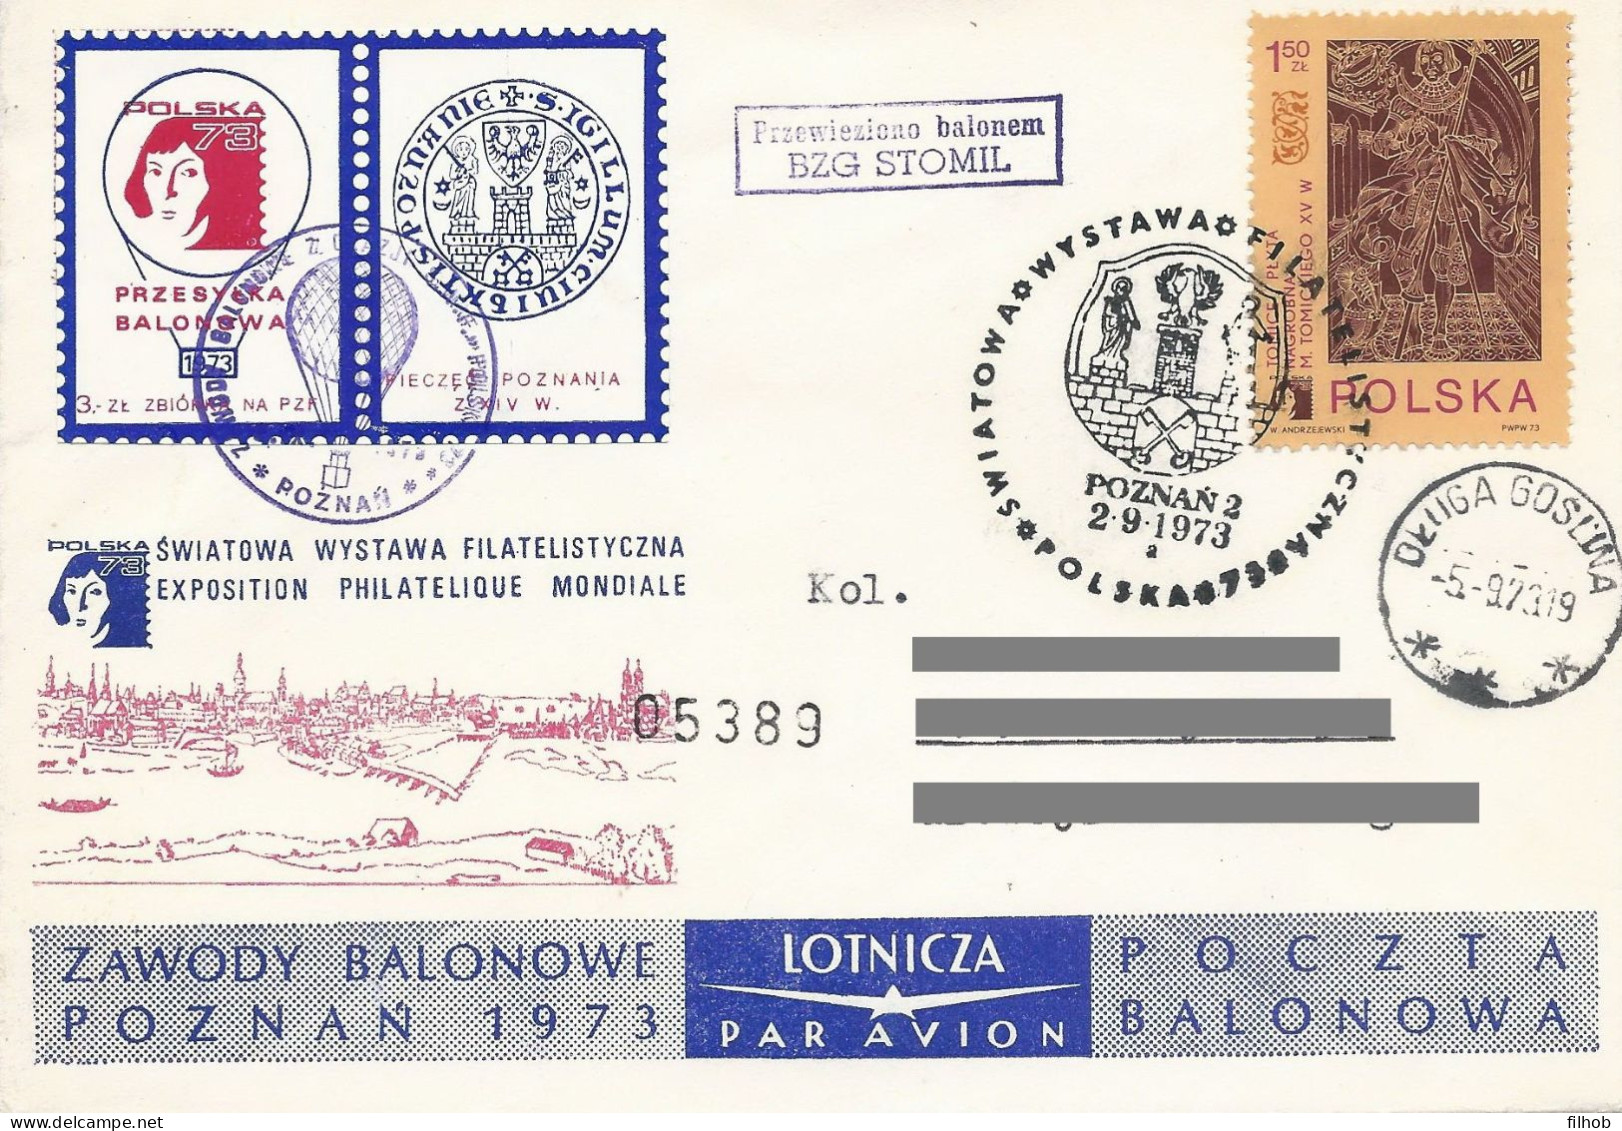 Poland Post - Balloon PBA.1973.poz.sto.B15: Competitions Poznan 73 STOMIL - Ballonpost